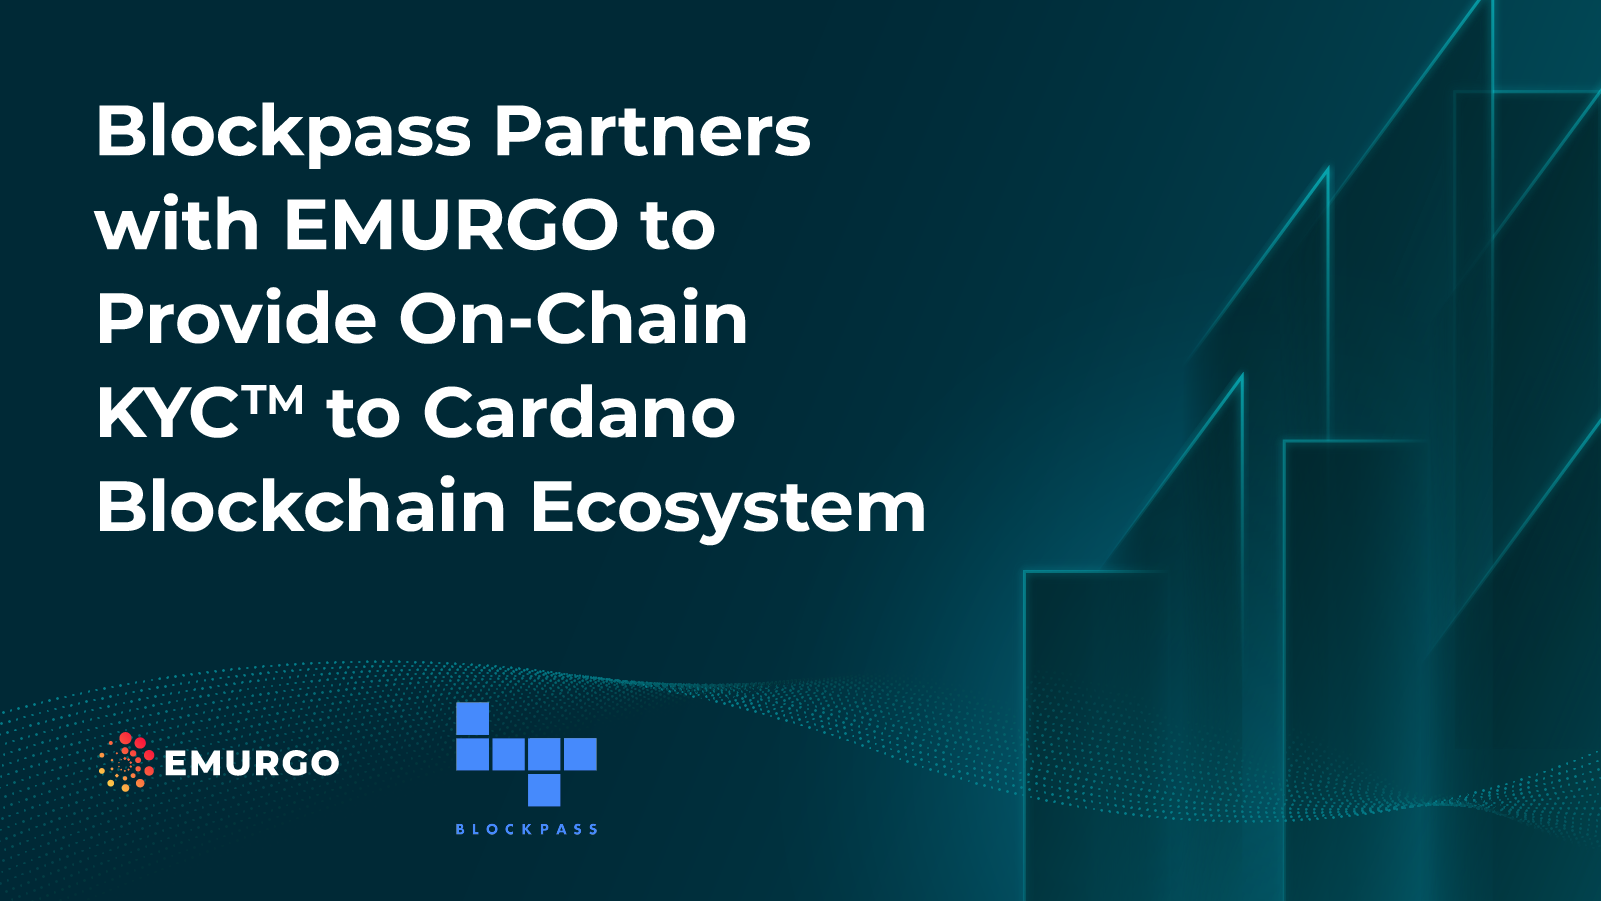 EMURGO-Blockpass-Cardano-Blockchain-Partnership1.png